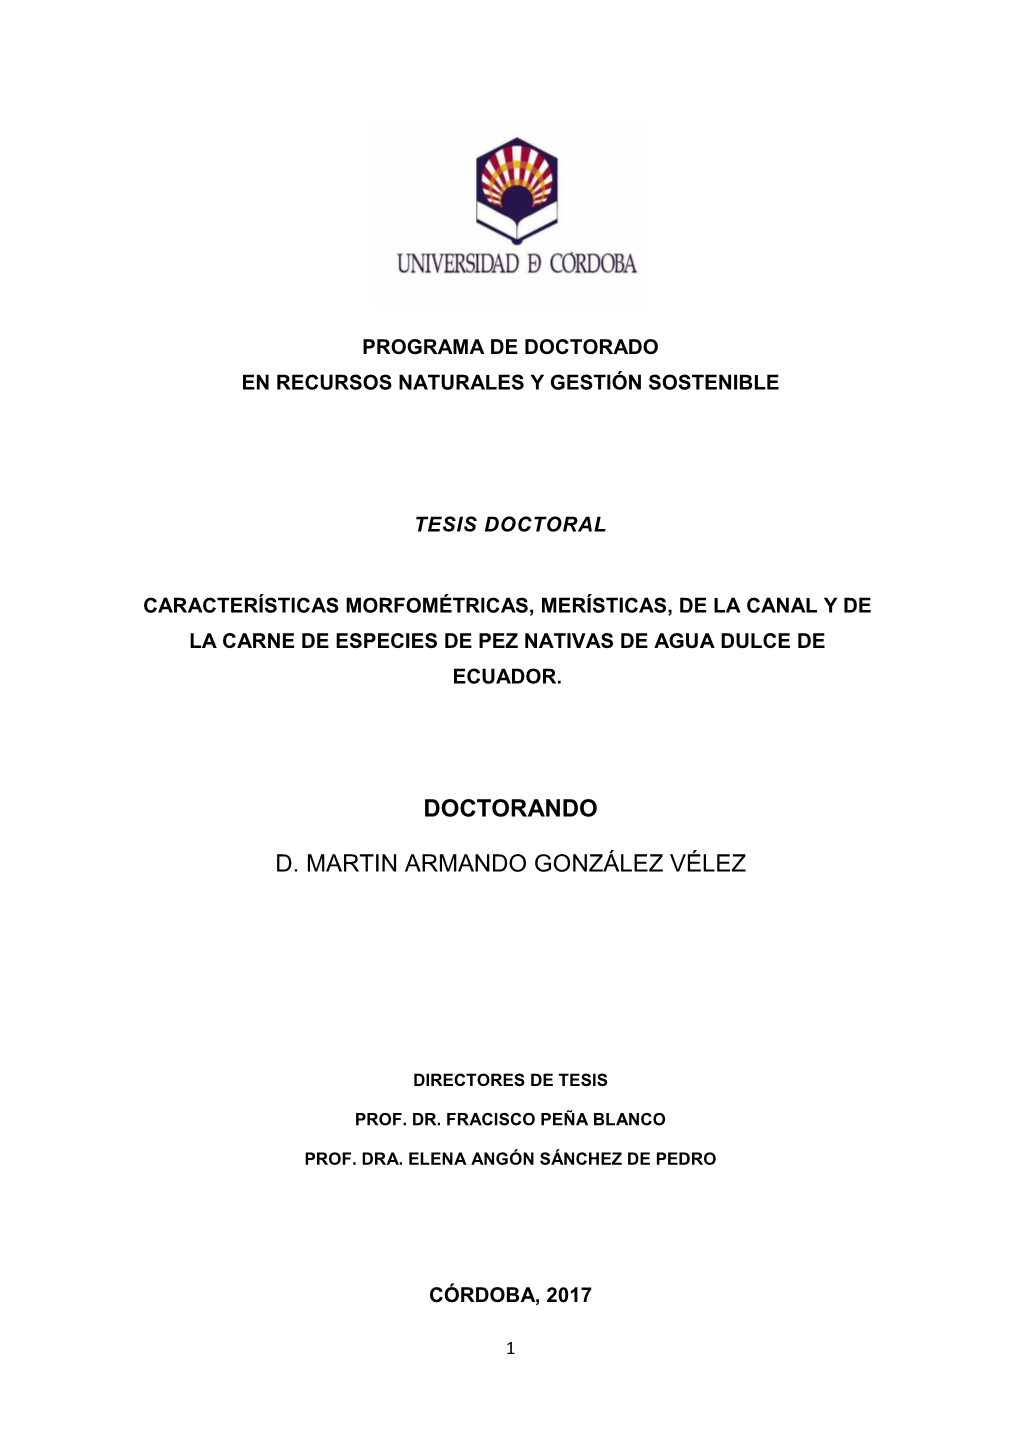 Doctorando D. Martin Armando González Vélez